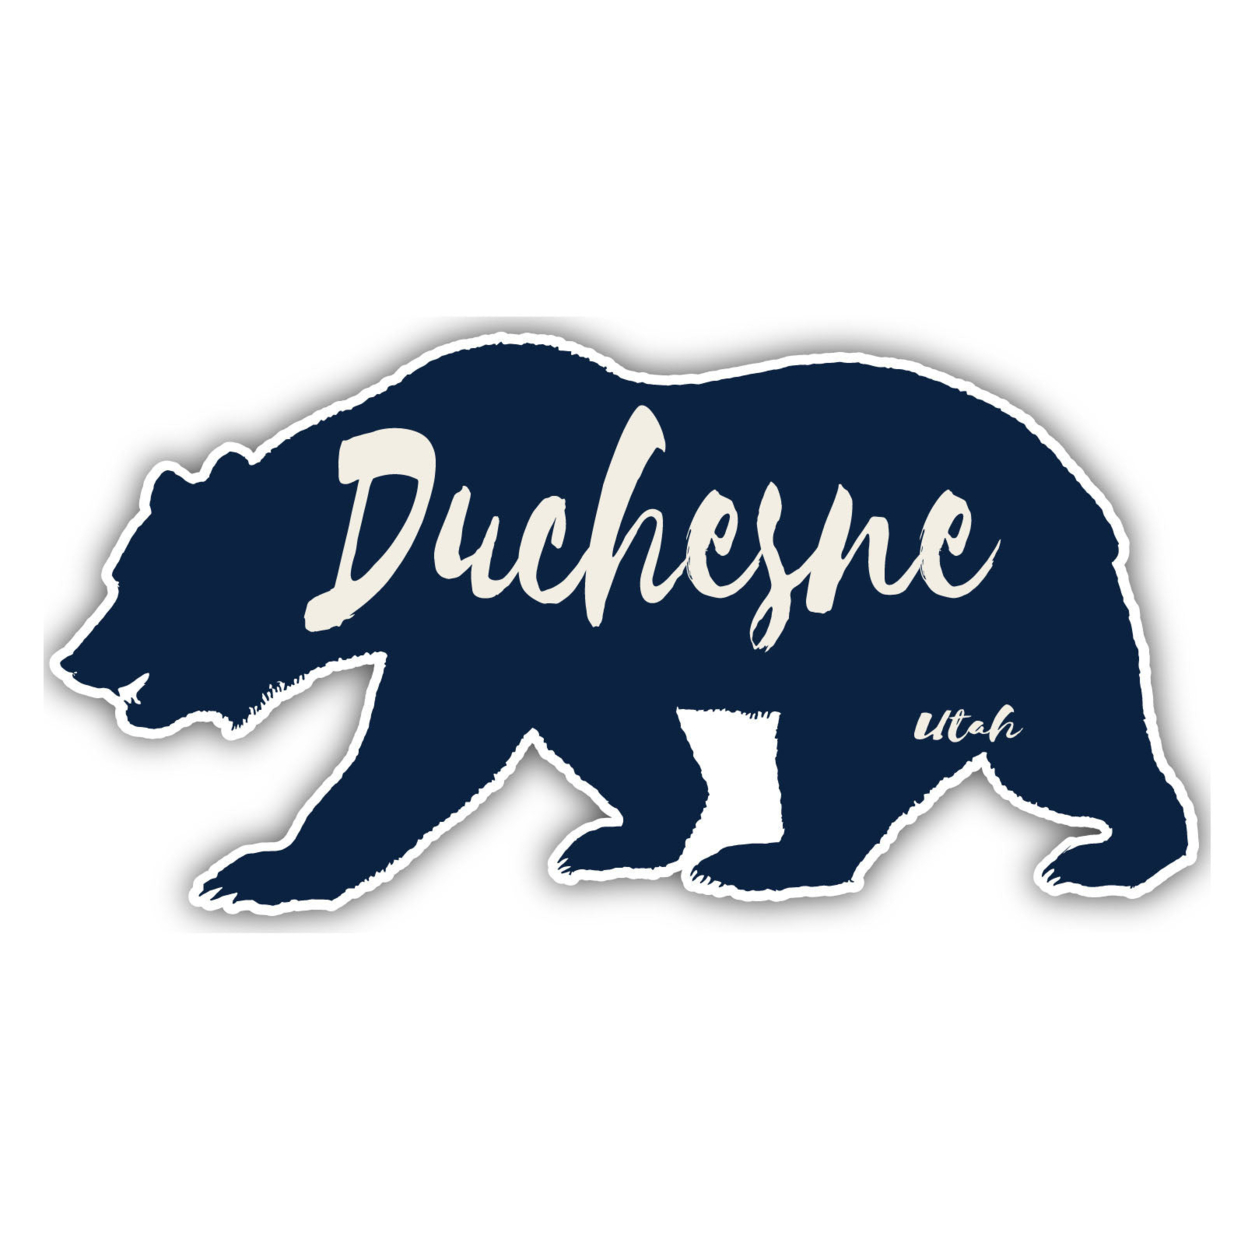 Duchesne Utah Souvenir Decorative Stickers (Choose Theme And Size) - 4-Pack, 2-Inch, Bear